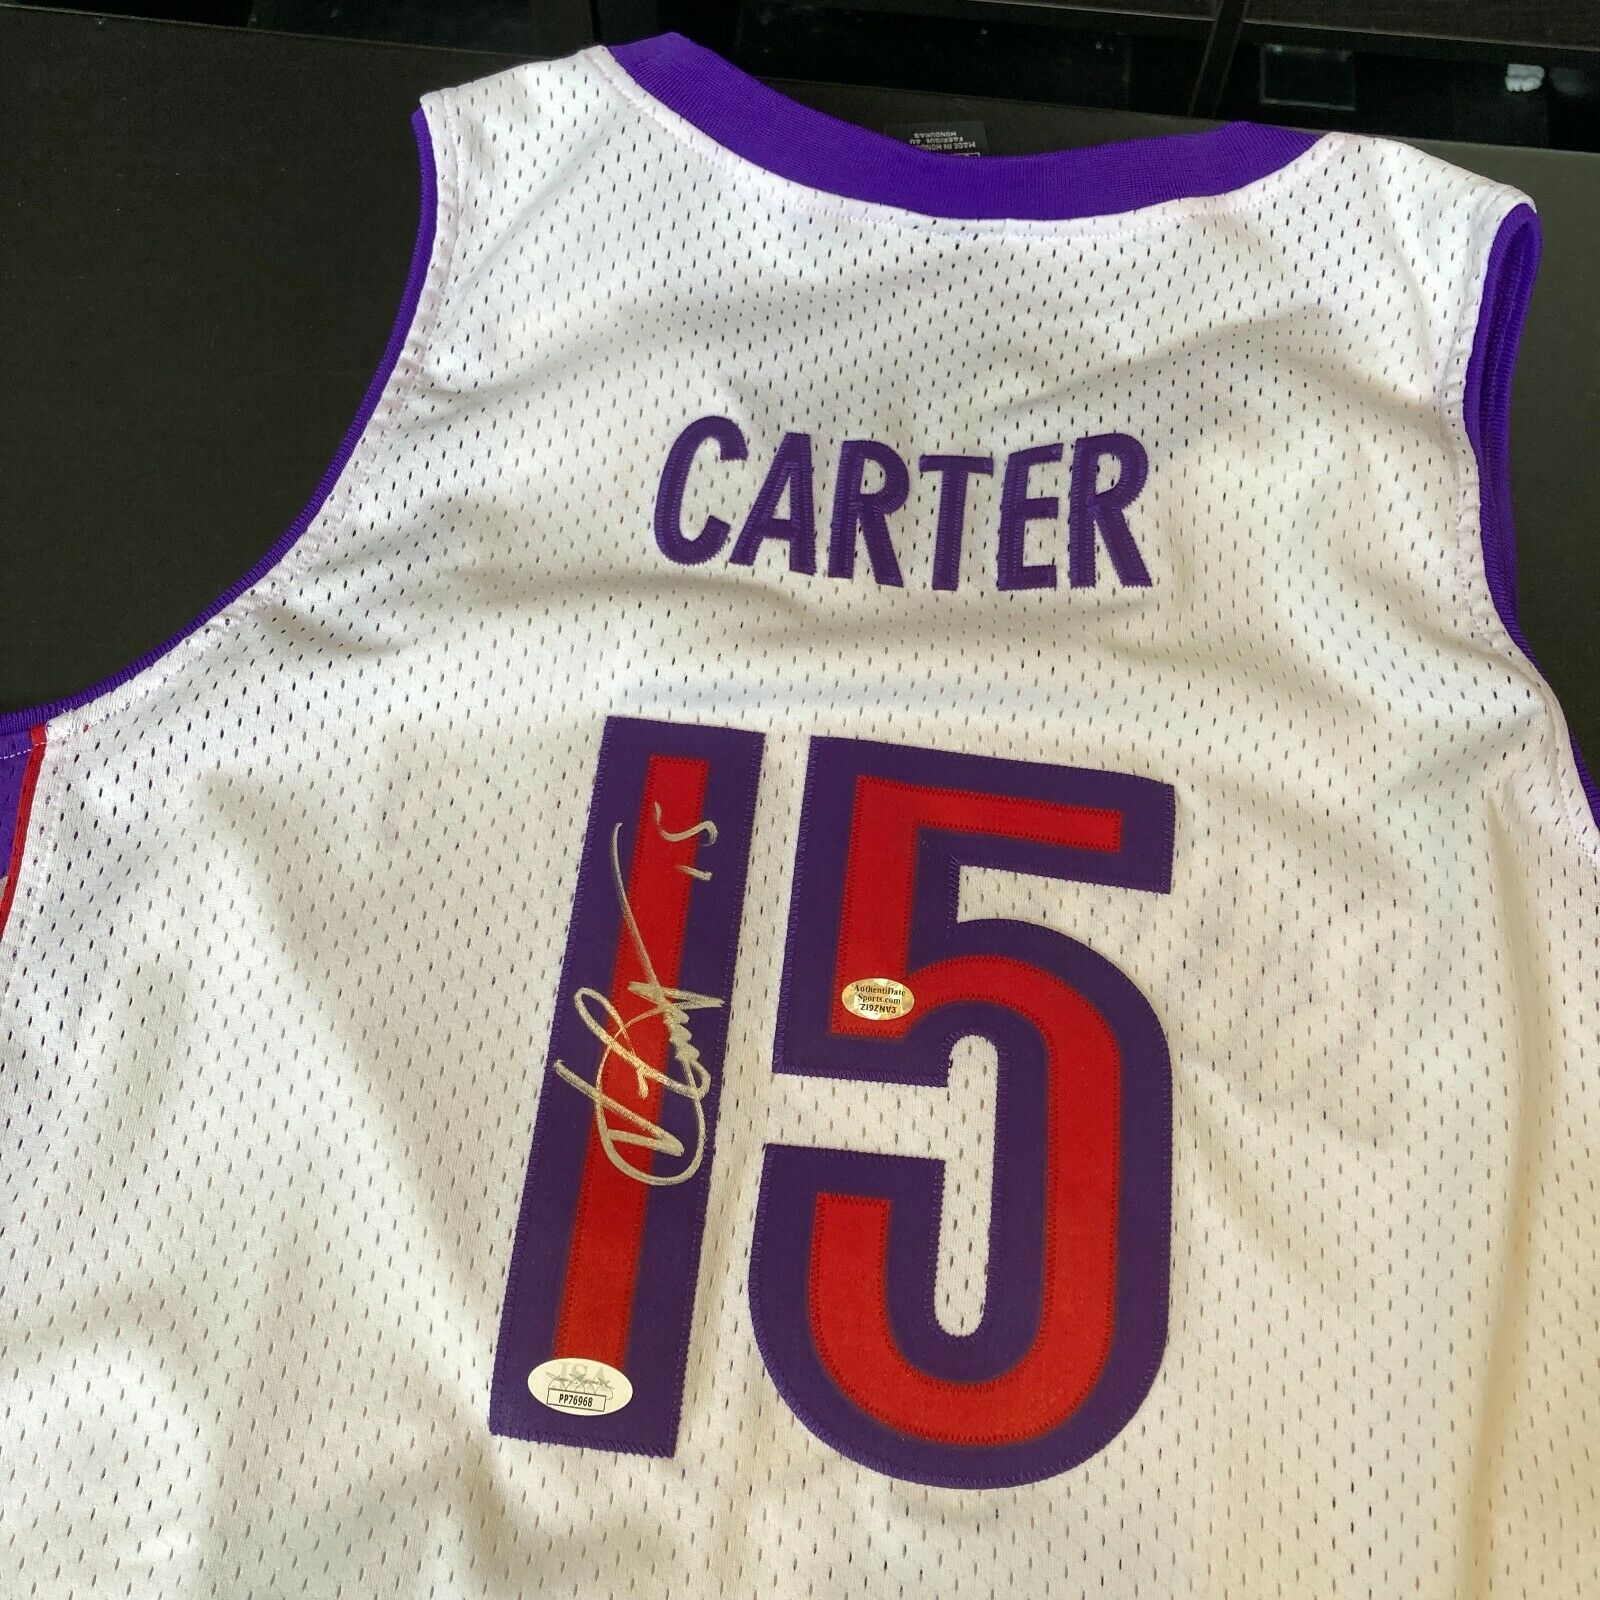 Vince Carter Signed Authentic Nike Toronto Raptors Jersey With JSA COA